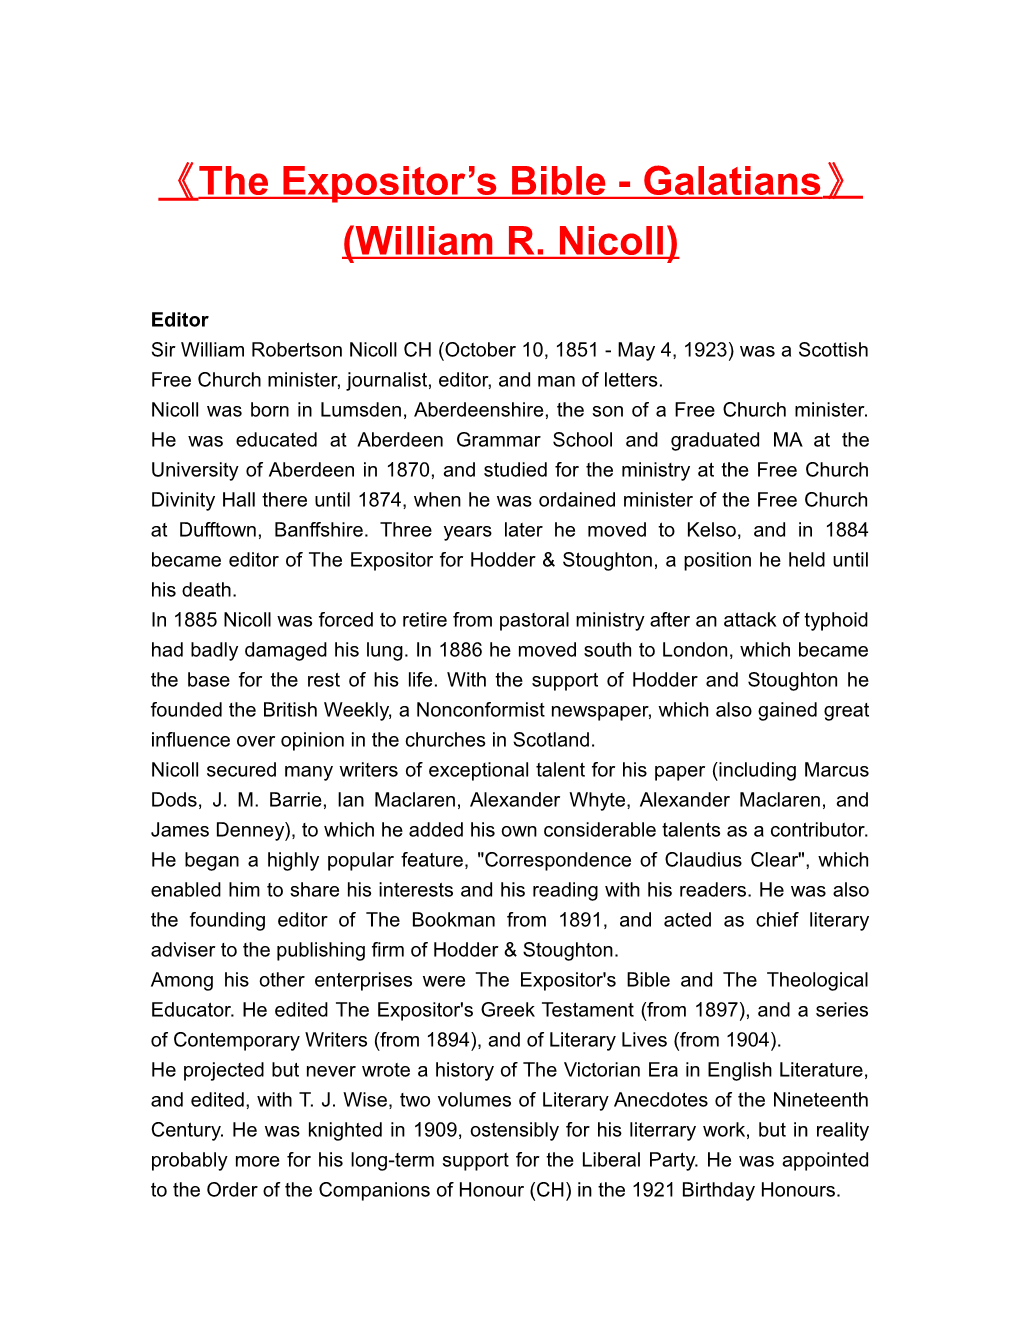 The Expositor S Bible - Galatians (William R. Nicoll)